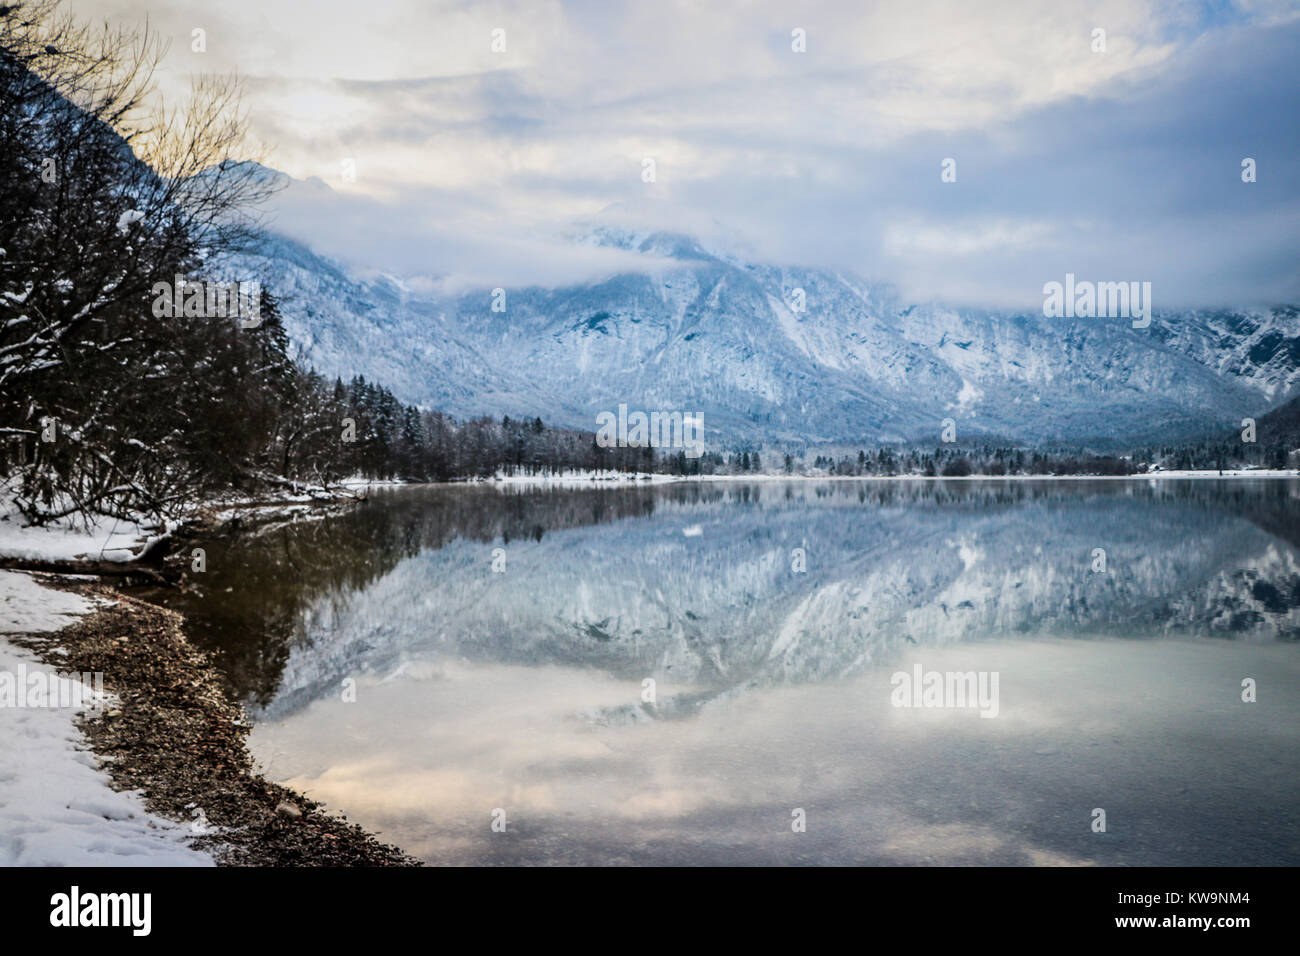 La asombrosa serenidad del lago de Bohinj, Eslovenia, es capturada en esta imagen maravillosa, perfecta para adornar la parte delantera de una tarjeta navideña o postal. Foto de stock